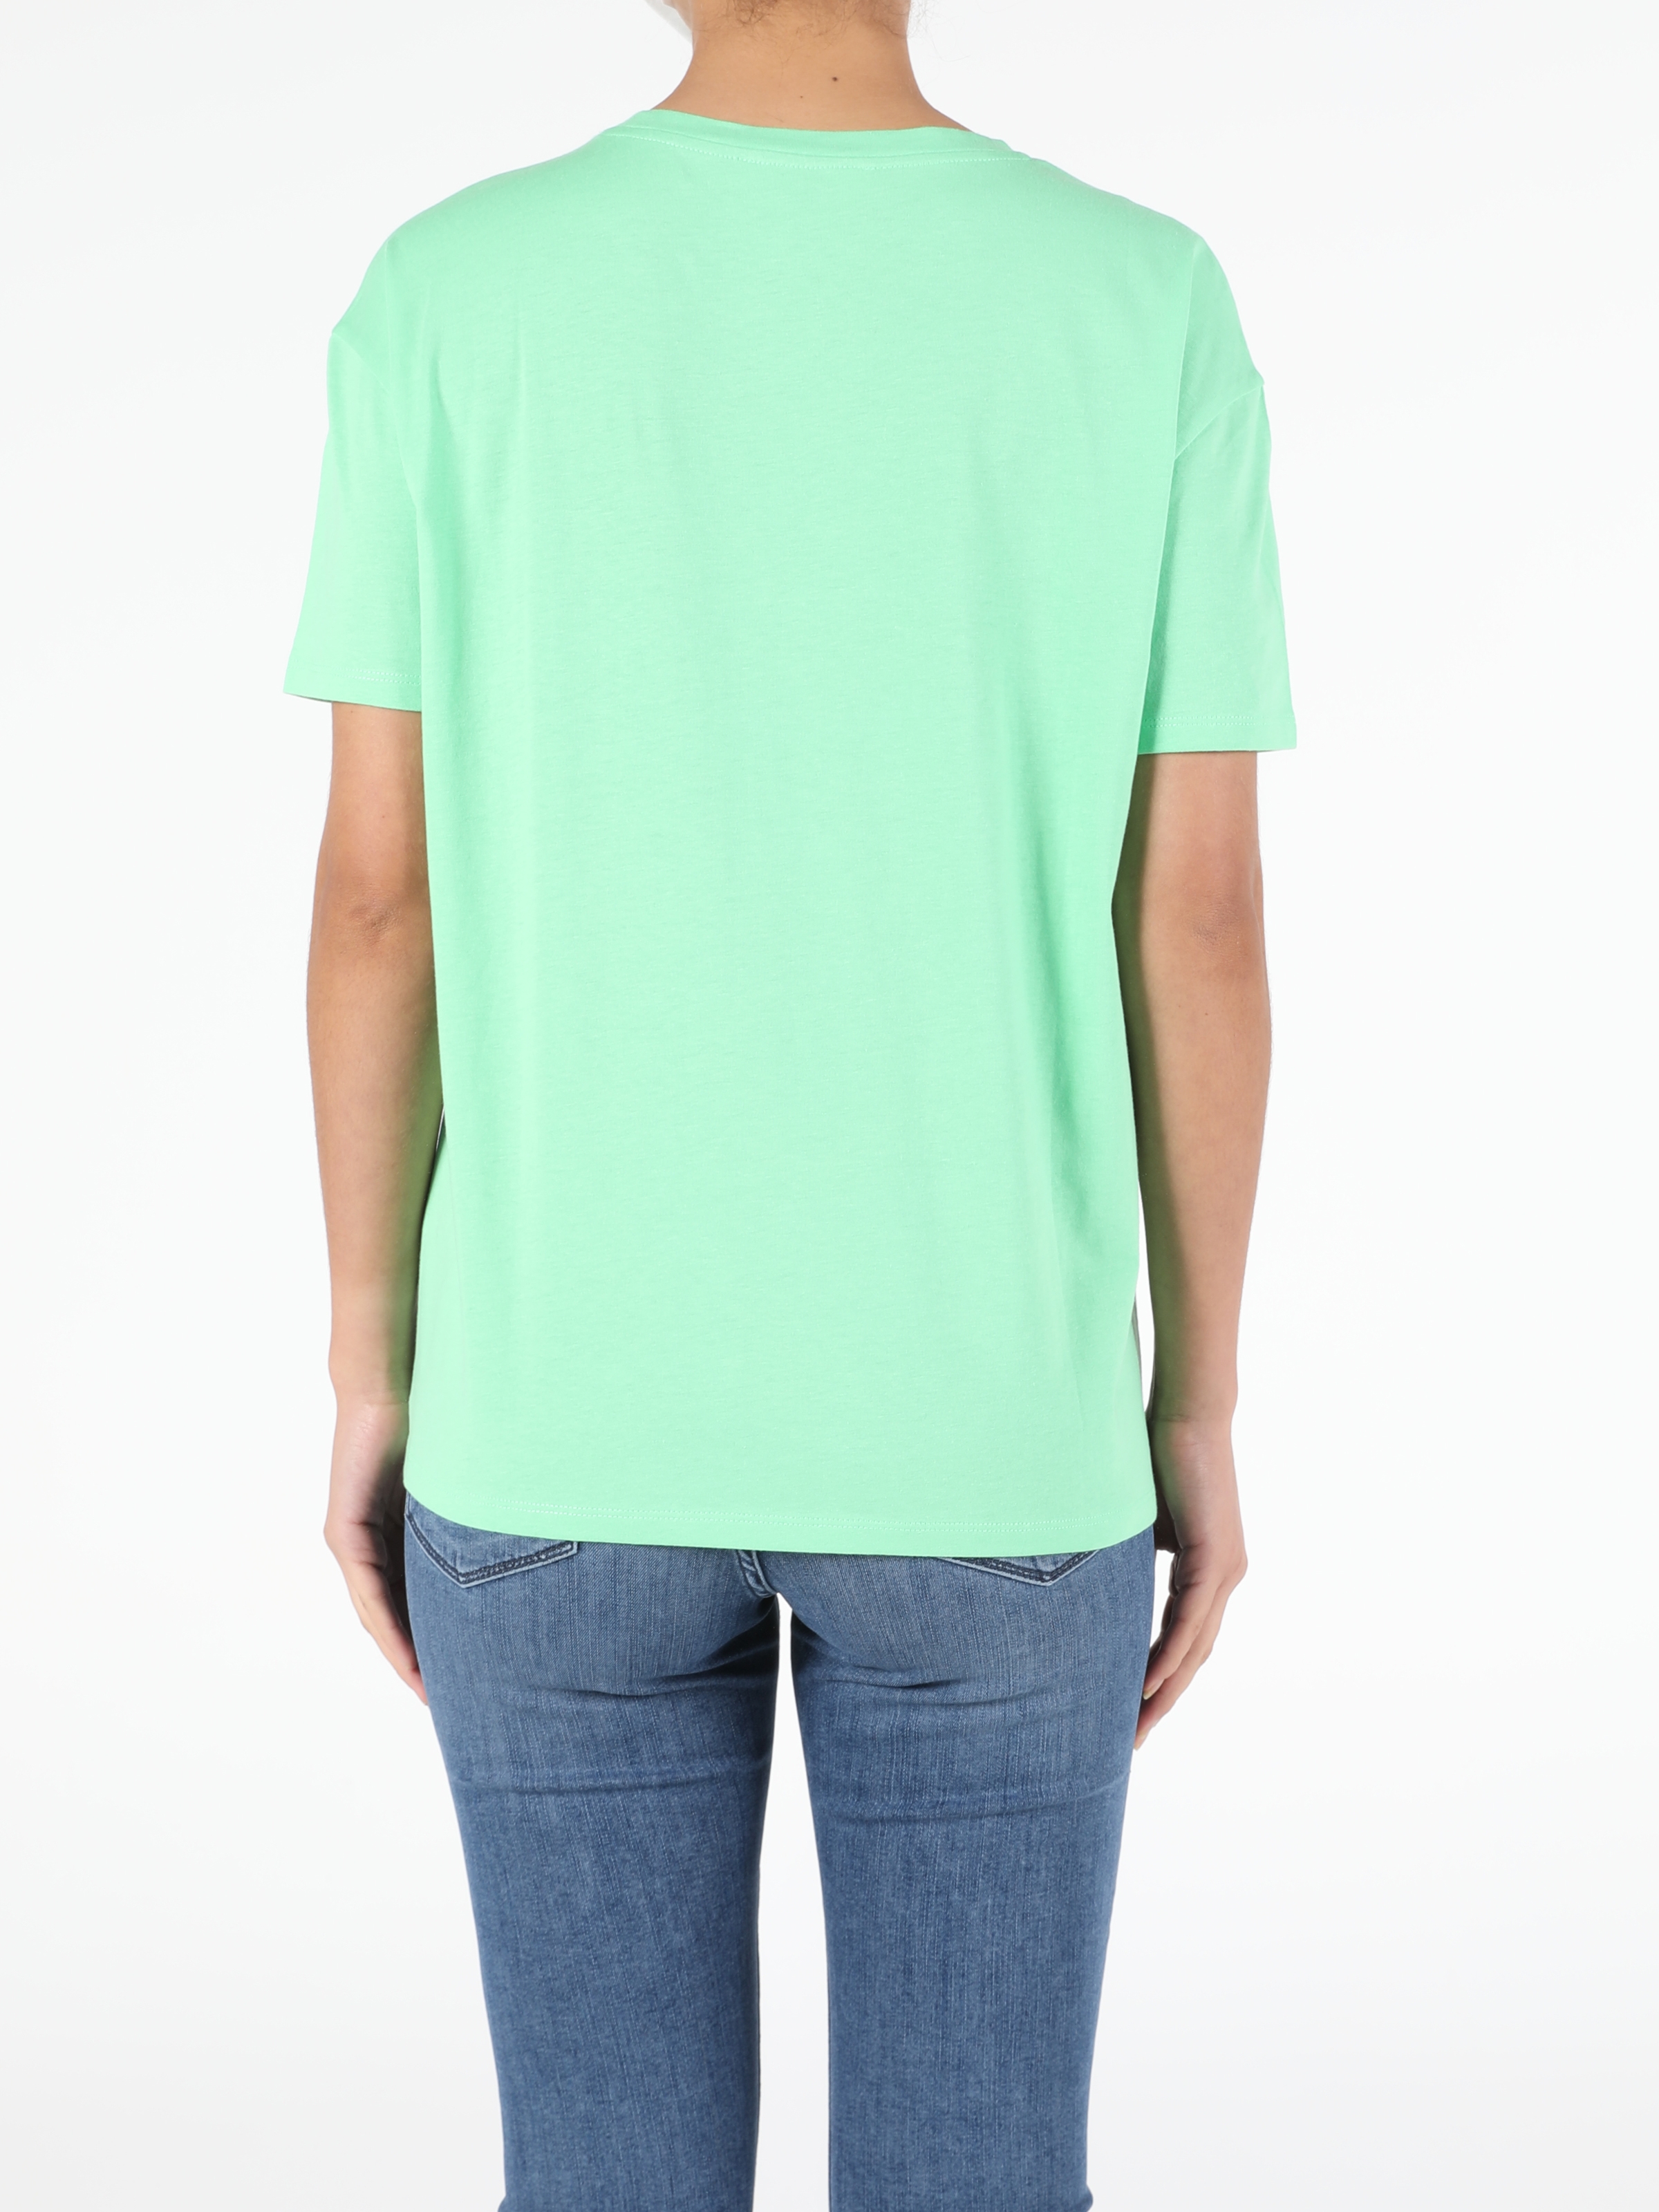 Colins Green Woman Short Sleeve Tshirt. 2